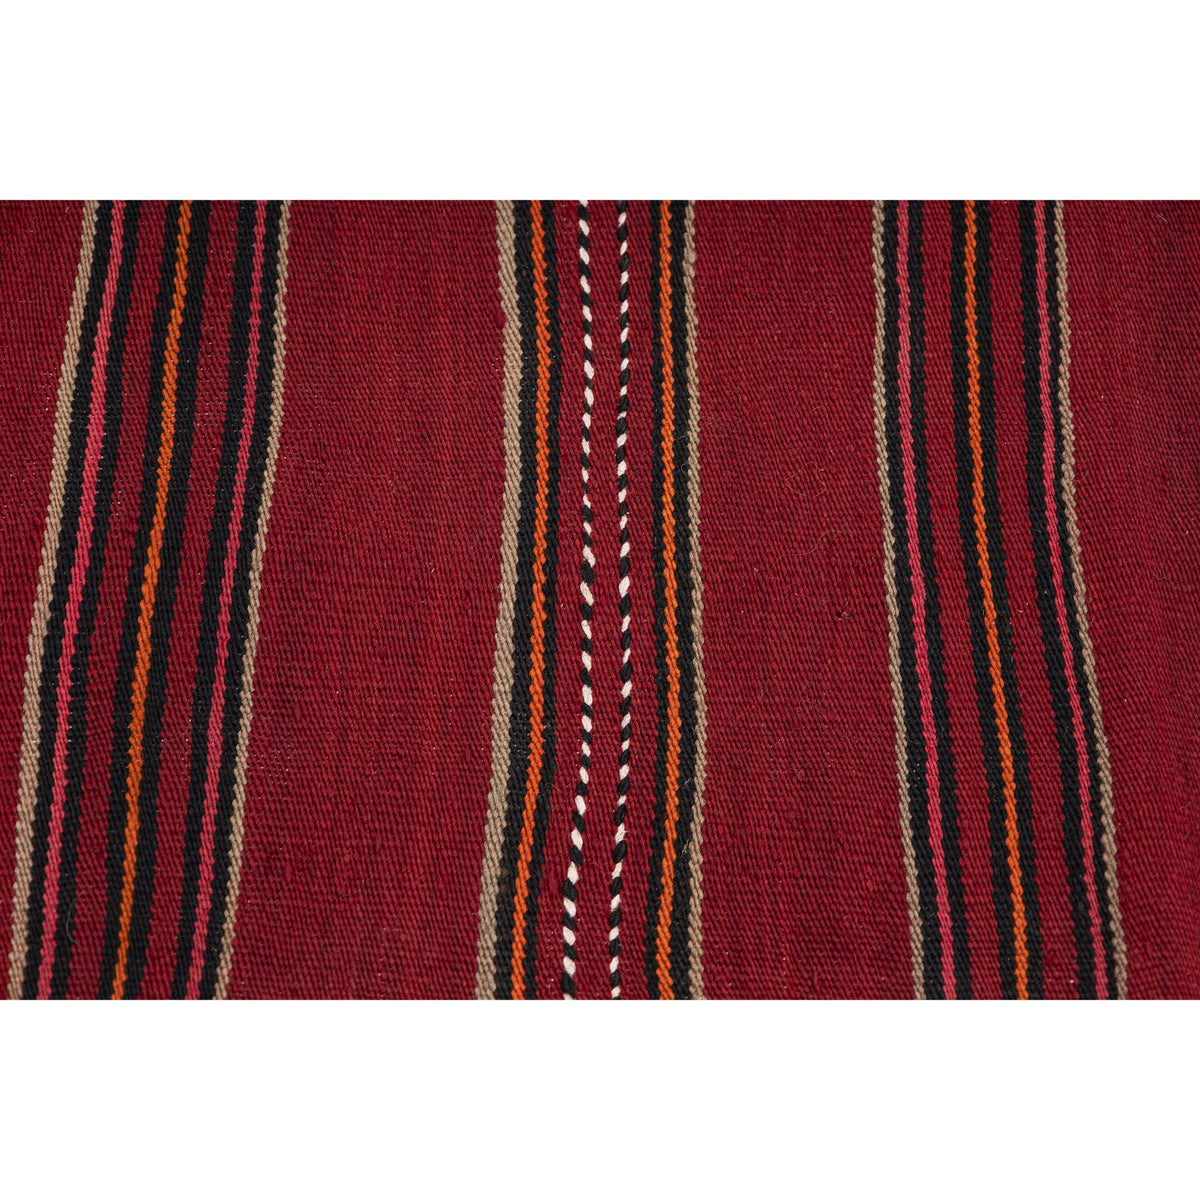 - (5' x 8'10'') Vintage Red Striped Kilim Rug